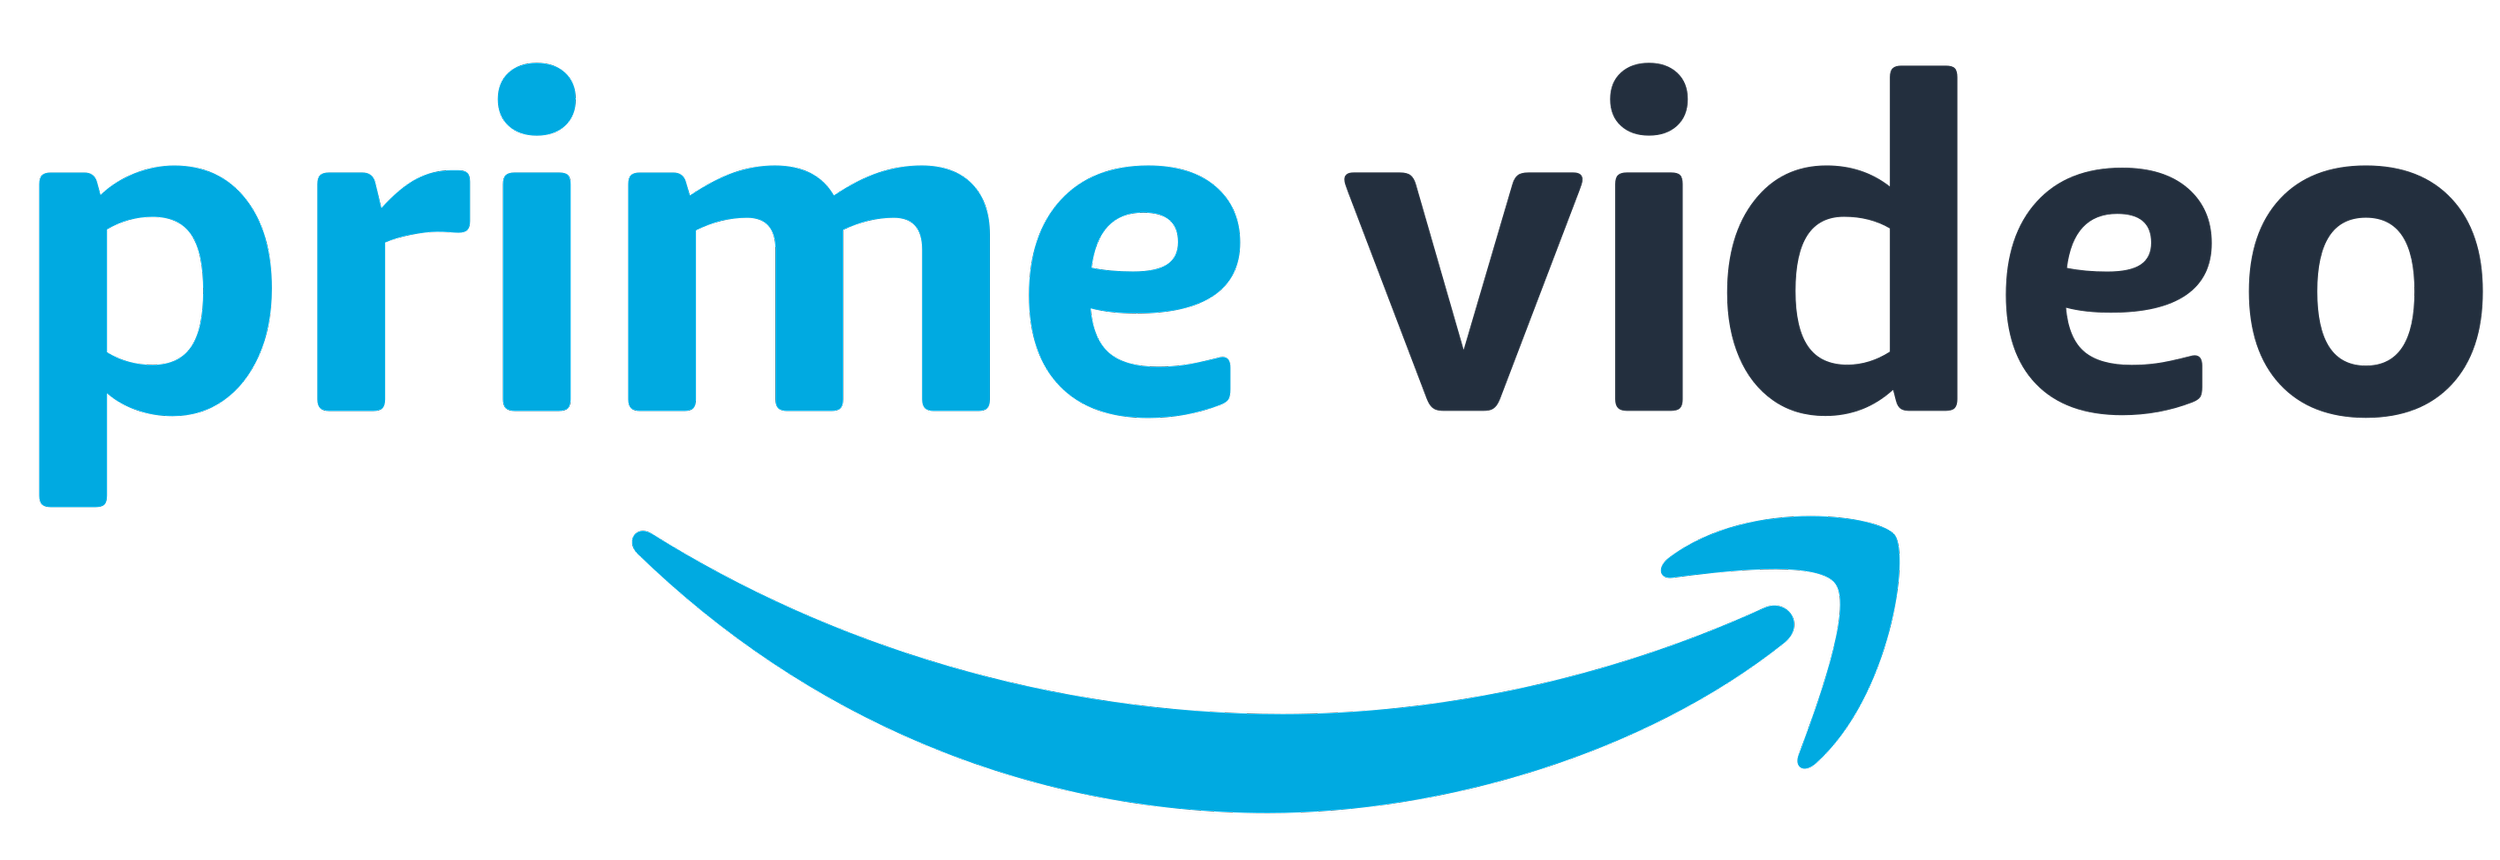 prime-video-logo-0.png